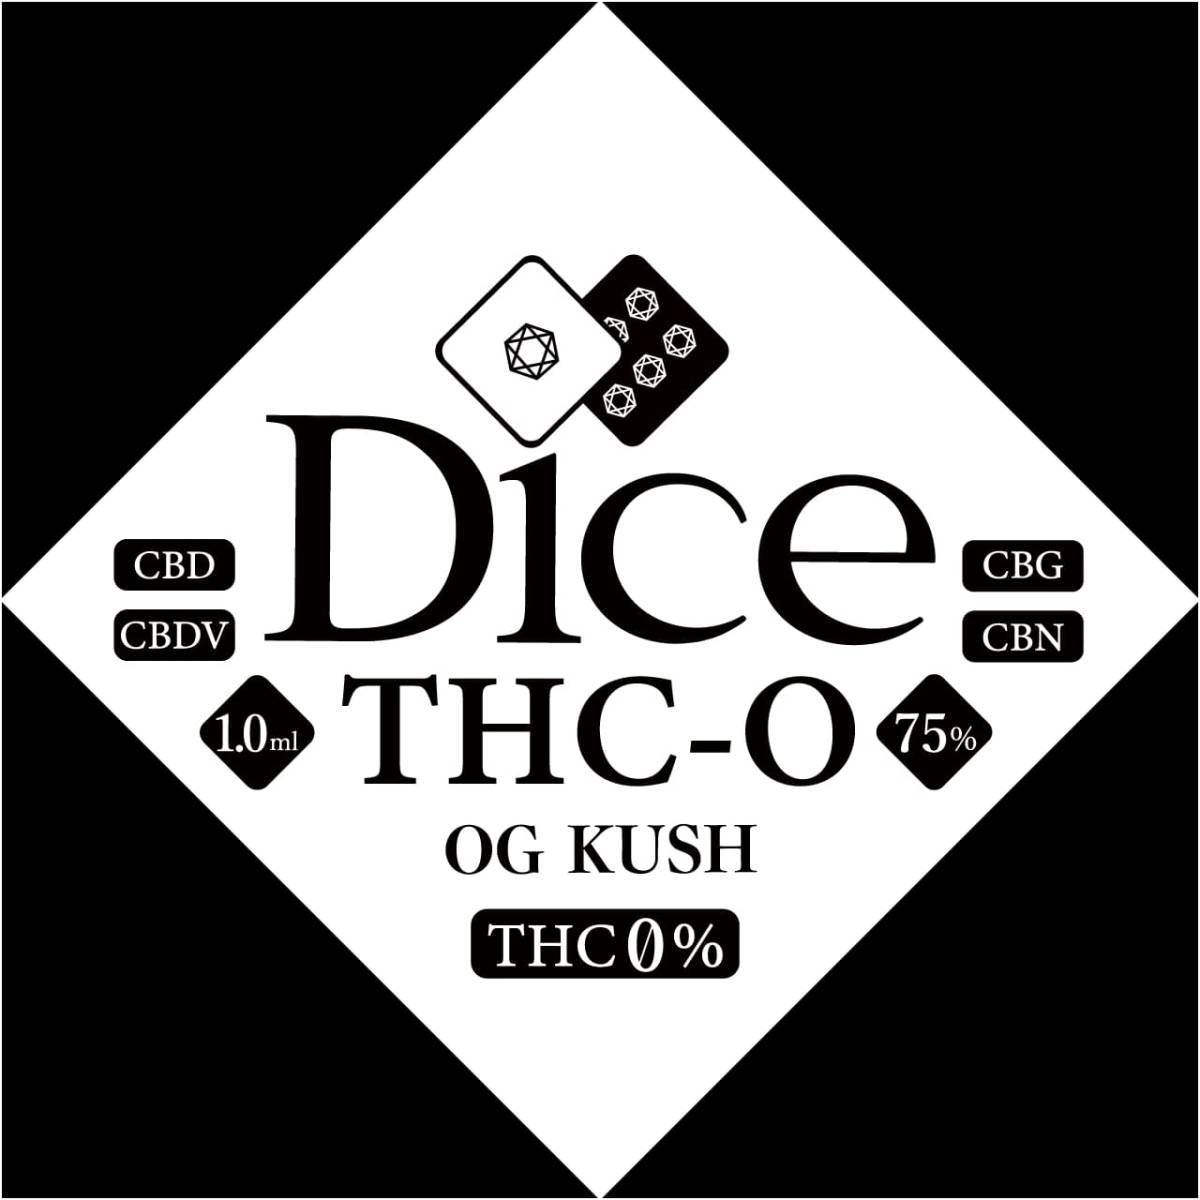 Dice THC-O 75％ 1.0ml 【OG KUSH】 THE WORLD is YOURS